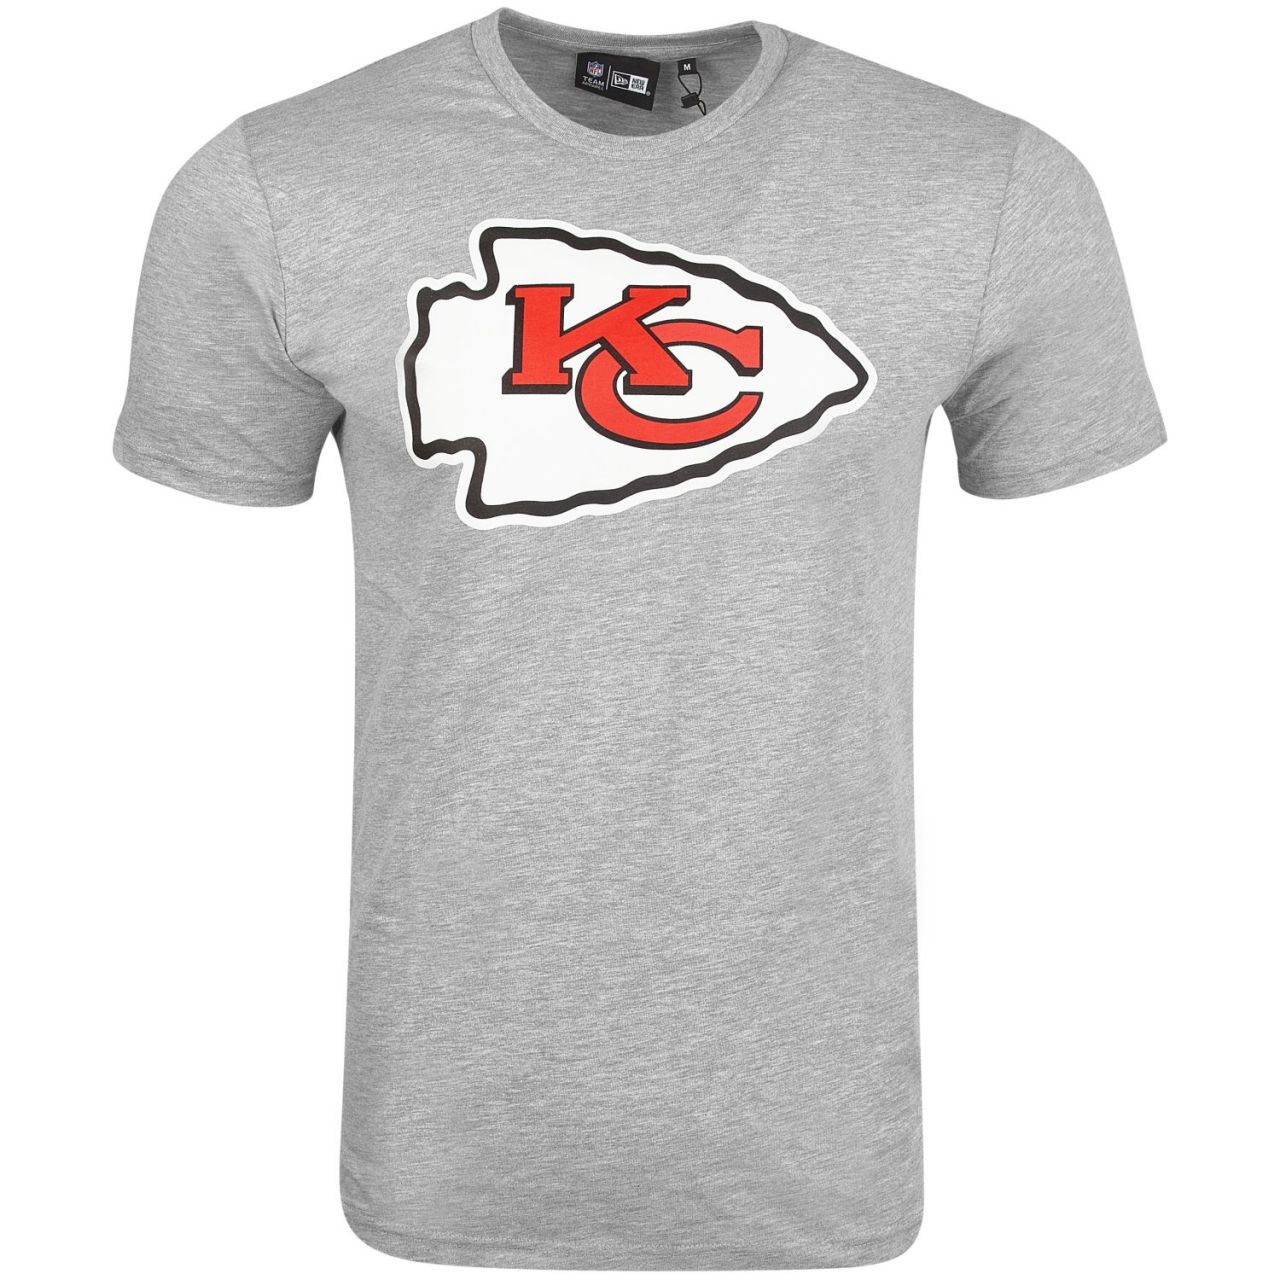 New Era Football Shirt - NFL Kansas City Chiefs grau von New Era